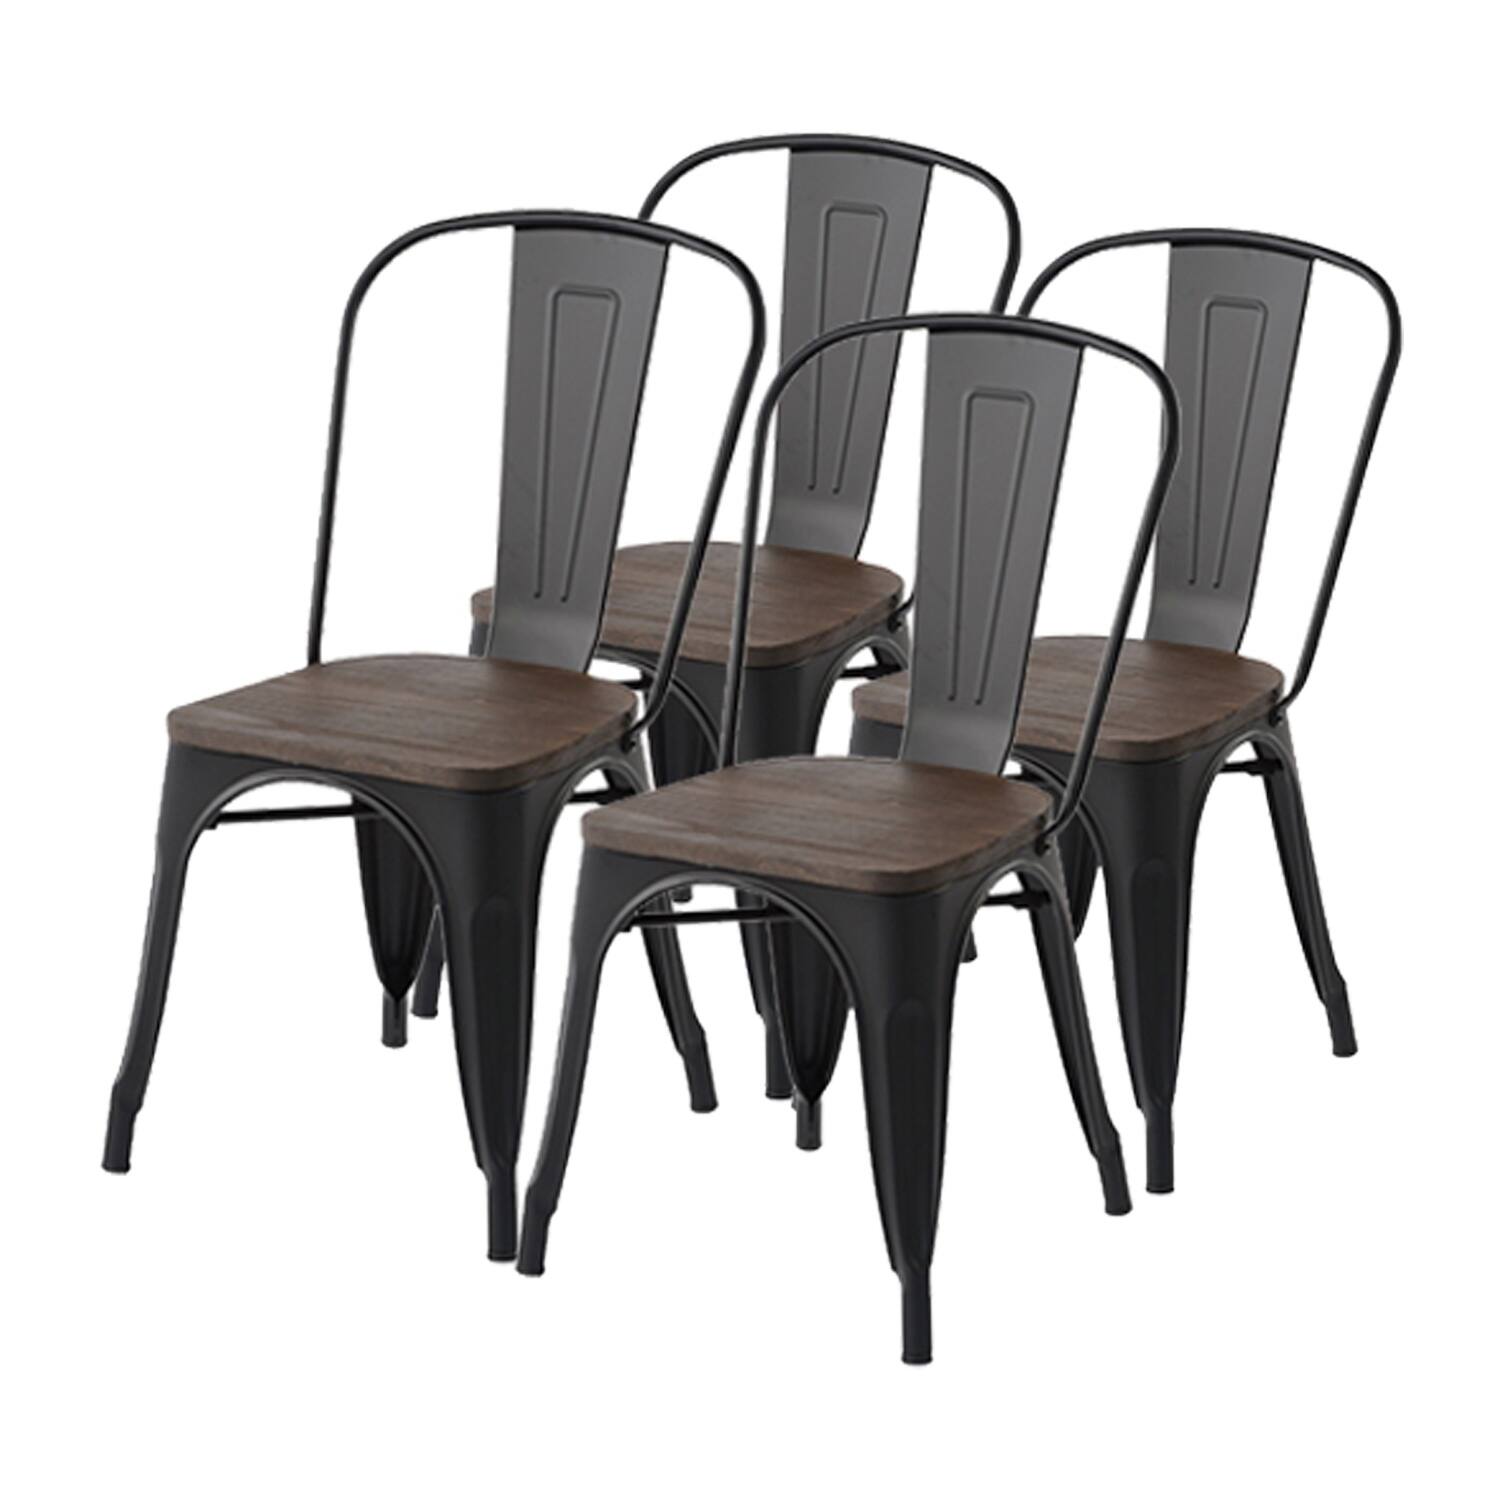 Homylin Metal Elm Wood Dining Chair